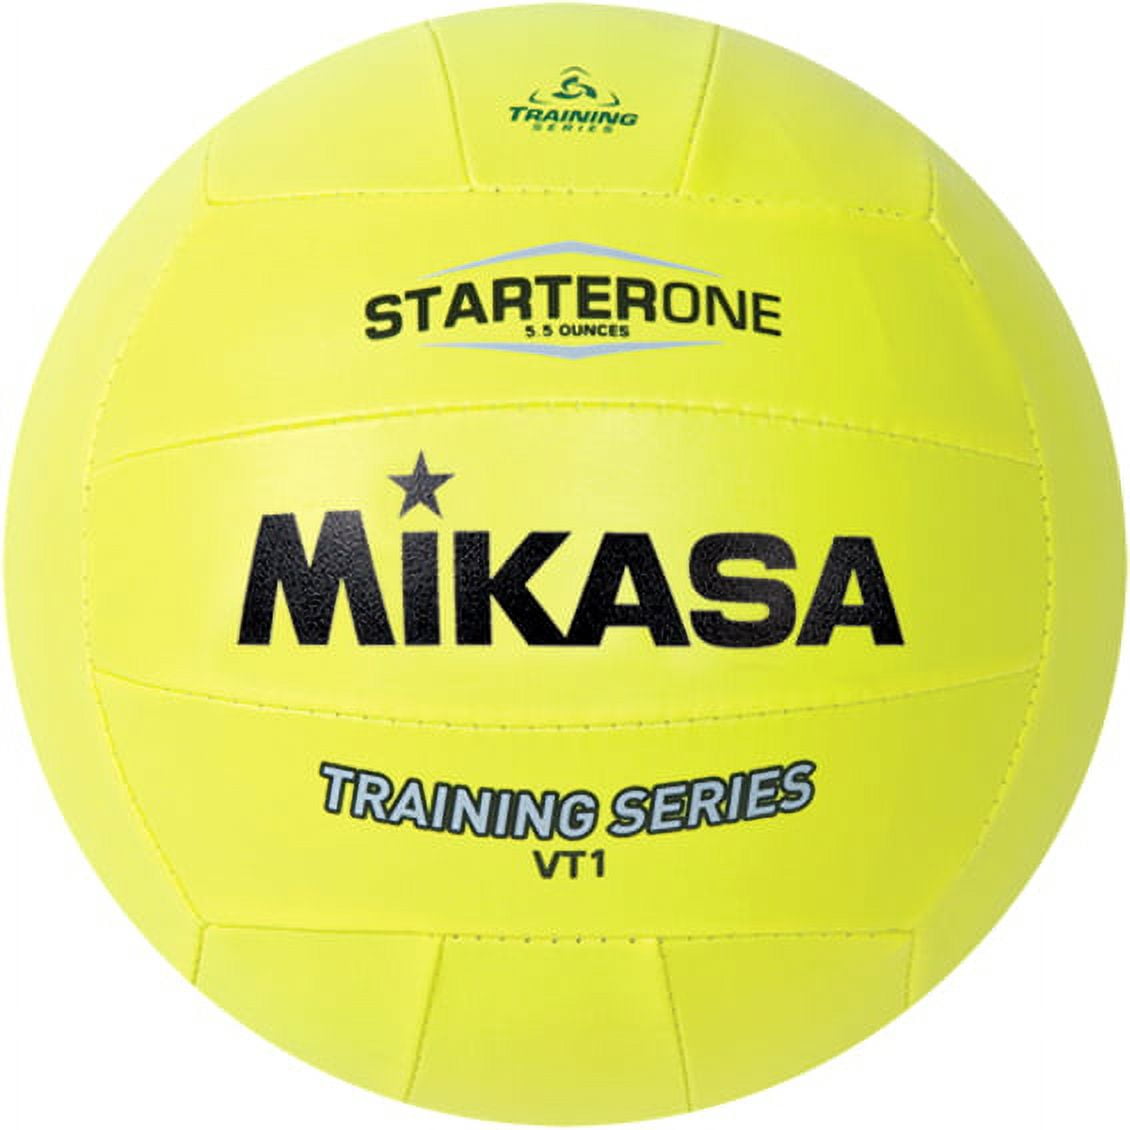 Mikasa VT1 Starter One Training Indoor Volleyball, Yellow